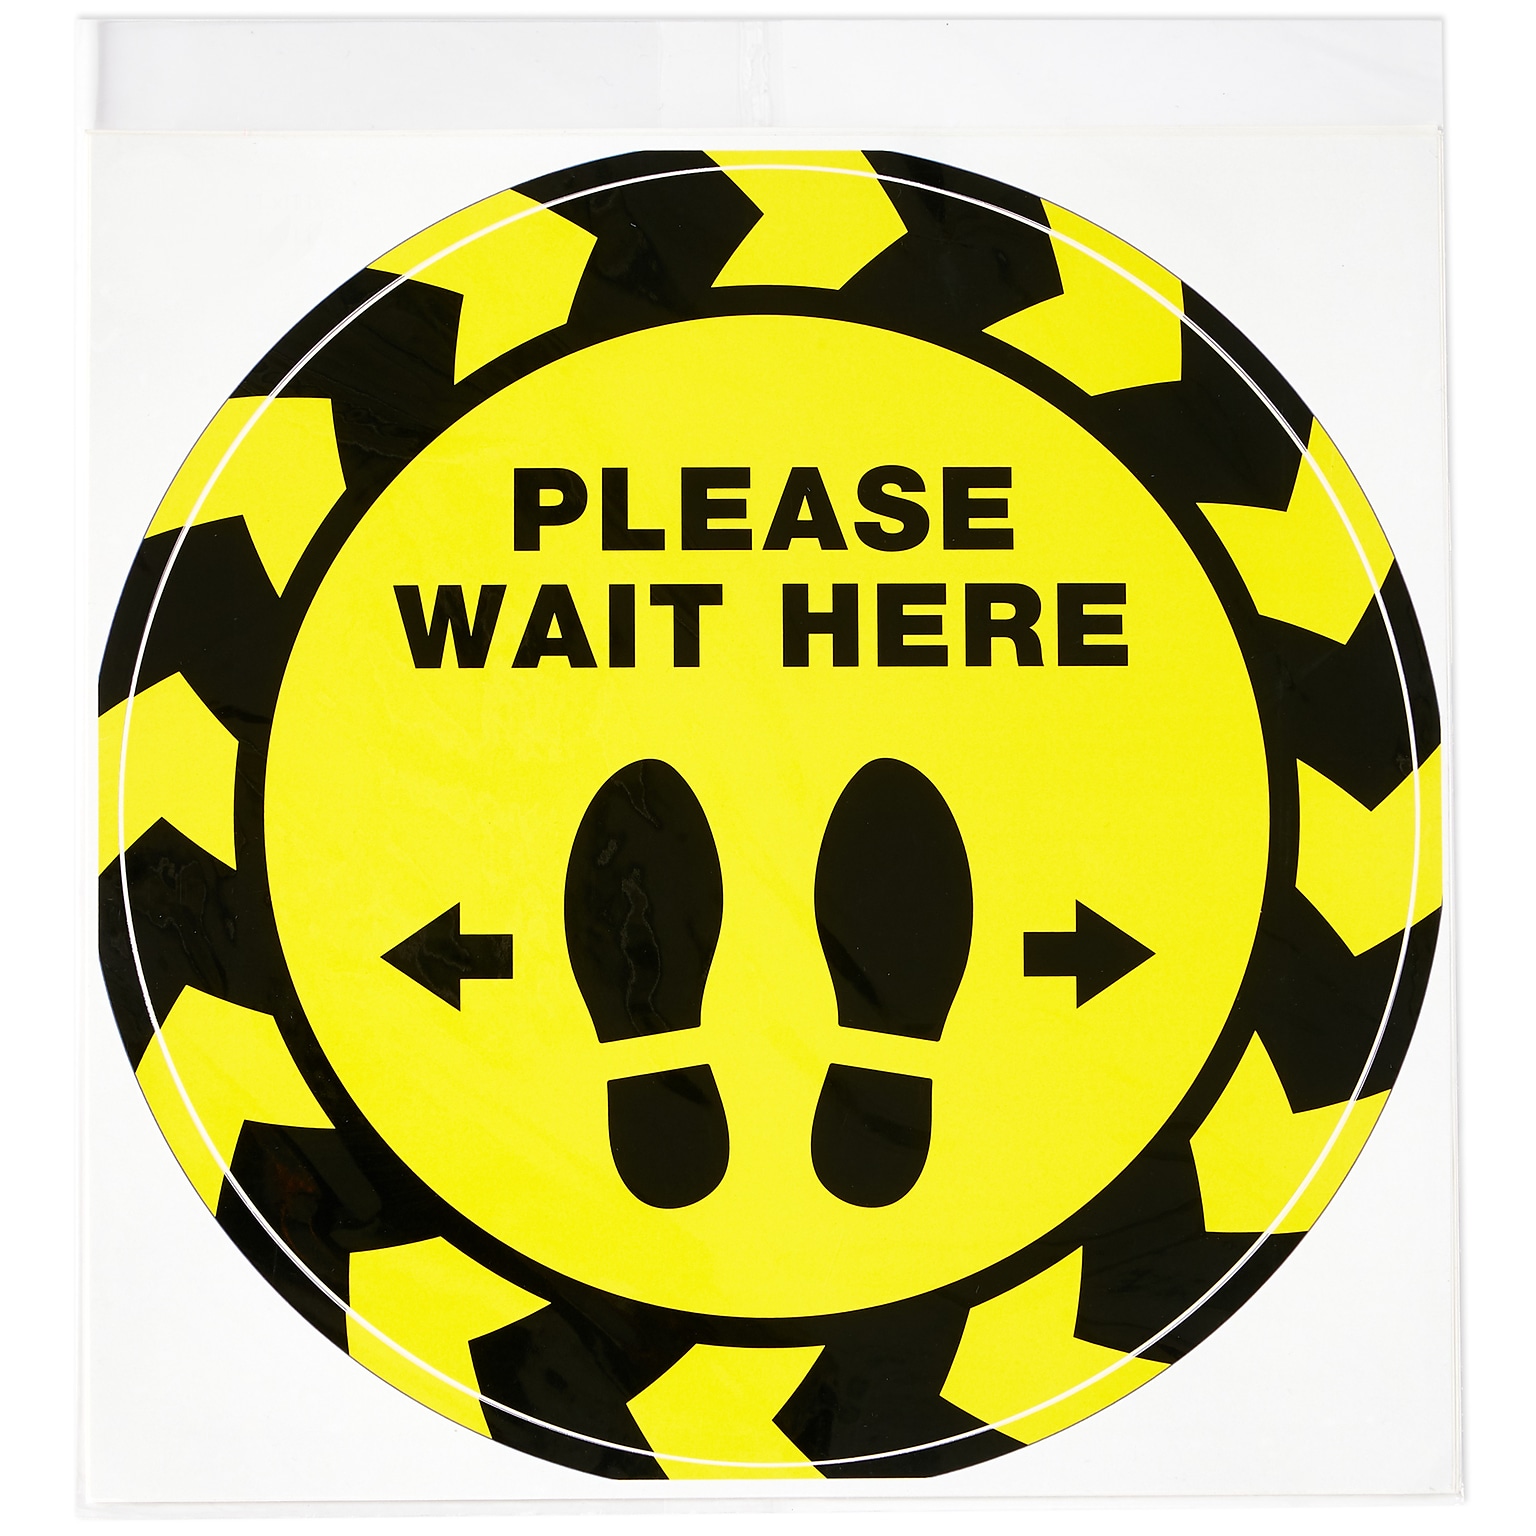 Avery Directional Please Wait Here Preprinted Floor Decals, 10.5 Diameter, Yellow/Black, 5/Pack (83020)